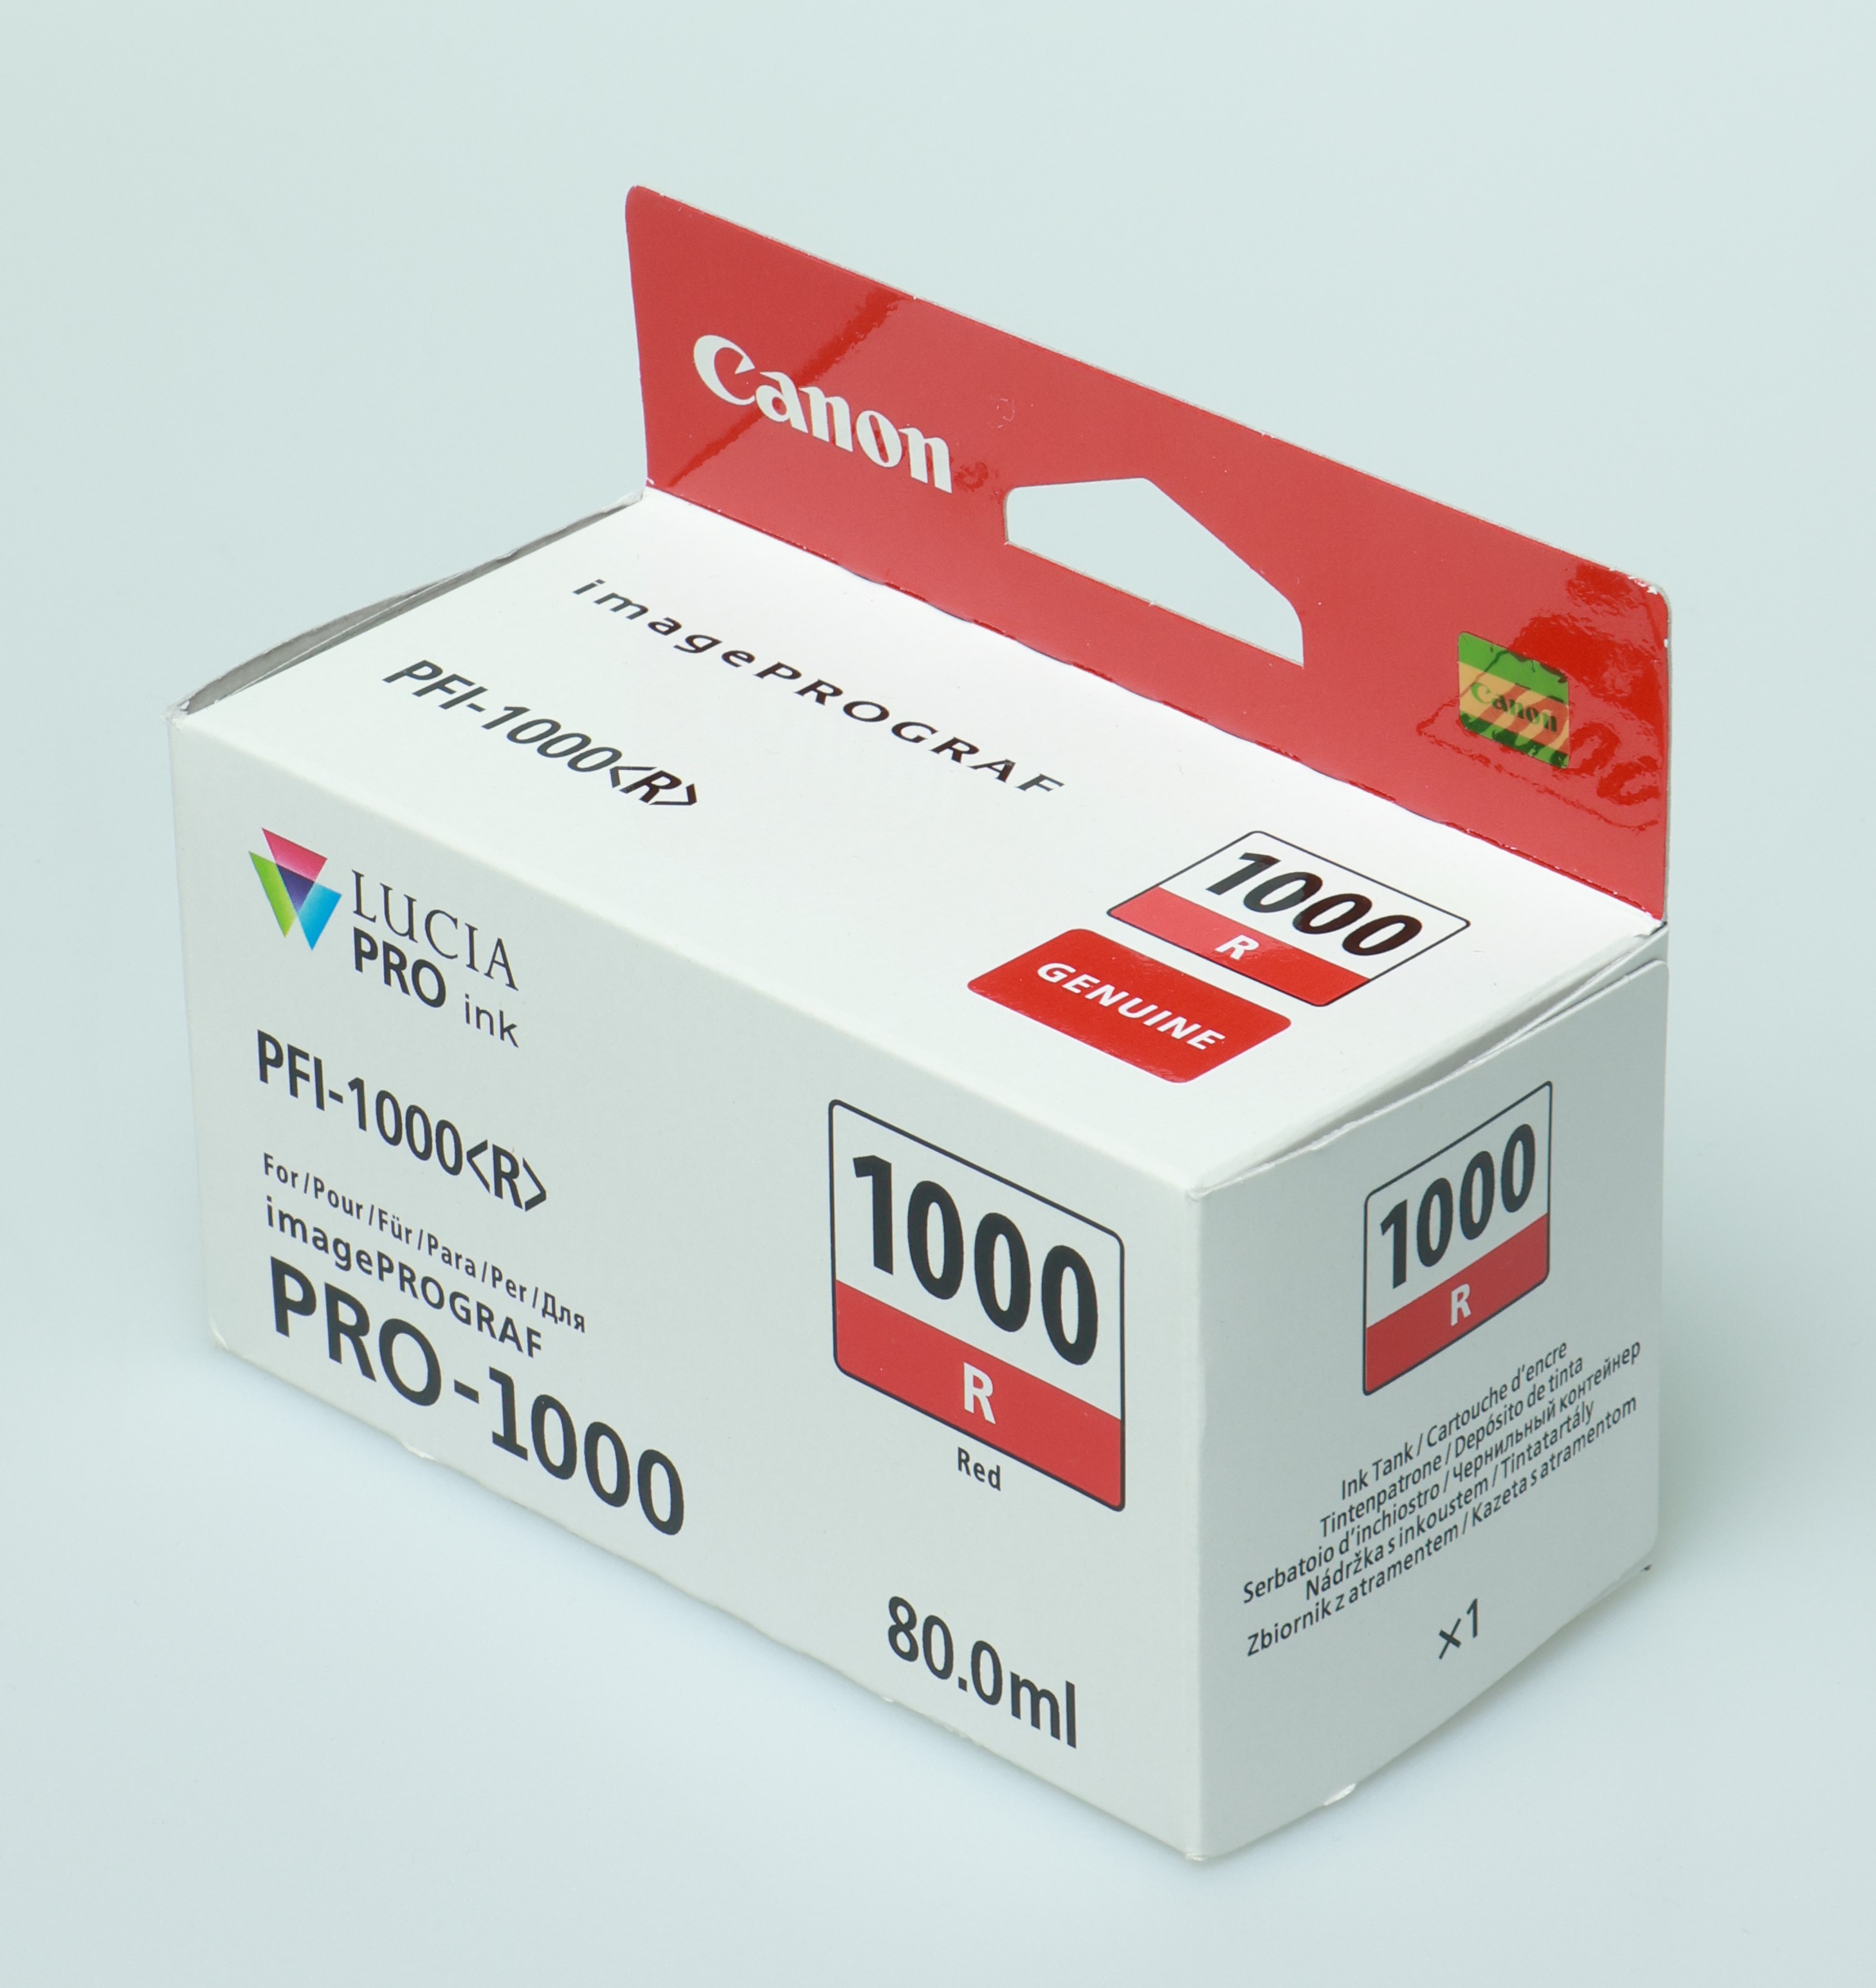 R Red, Canon professionel blæk til PRO 1000, 80 ml  